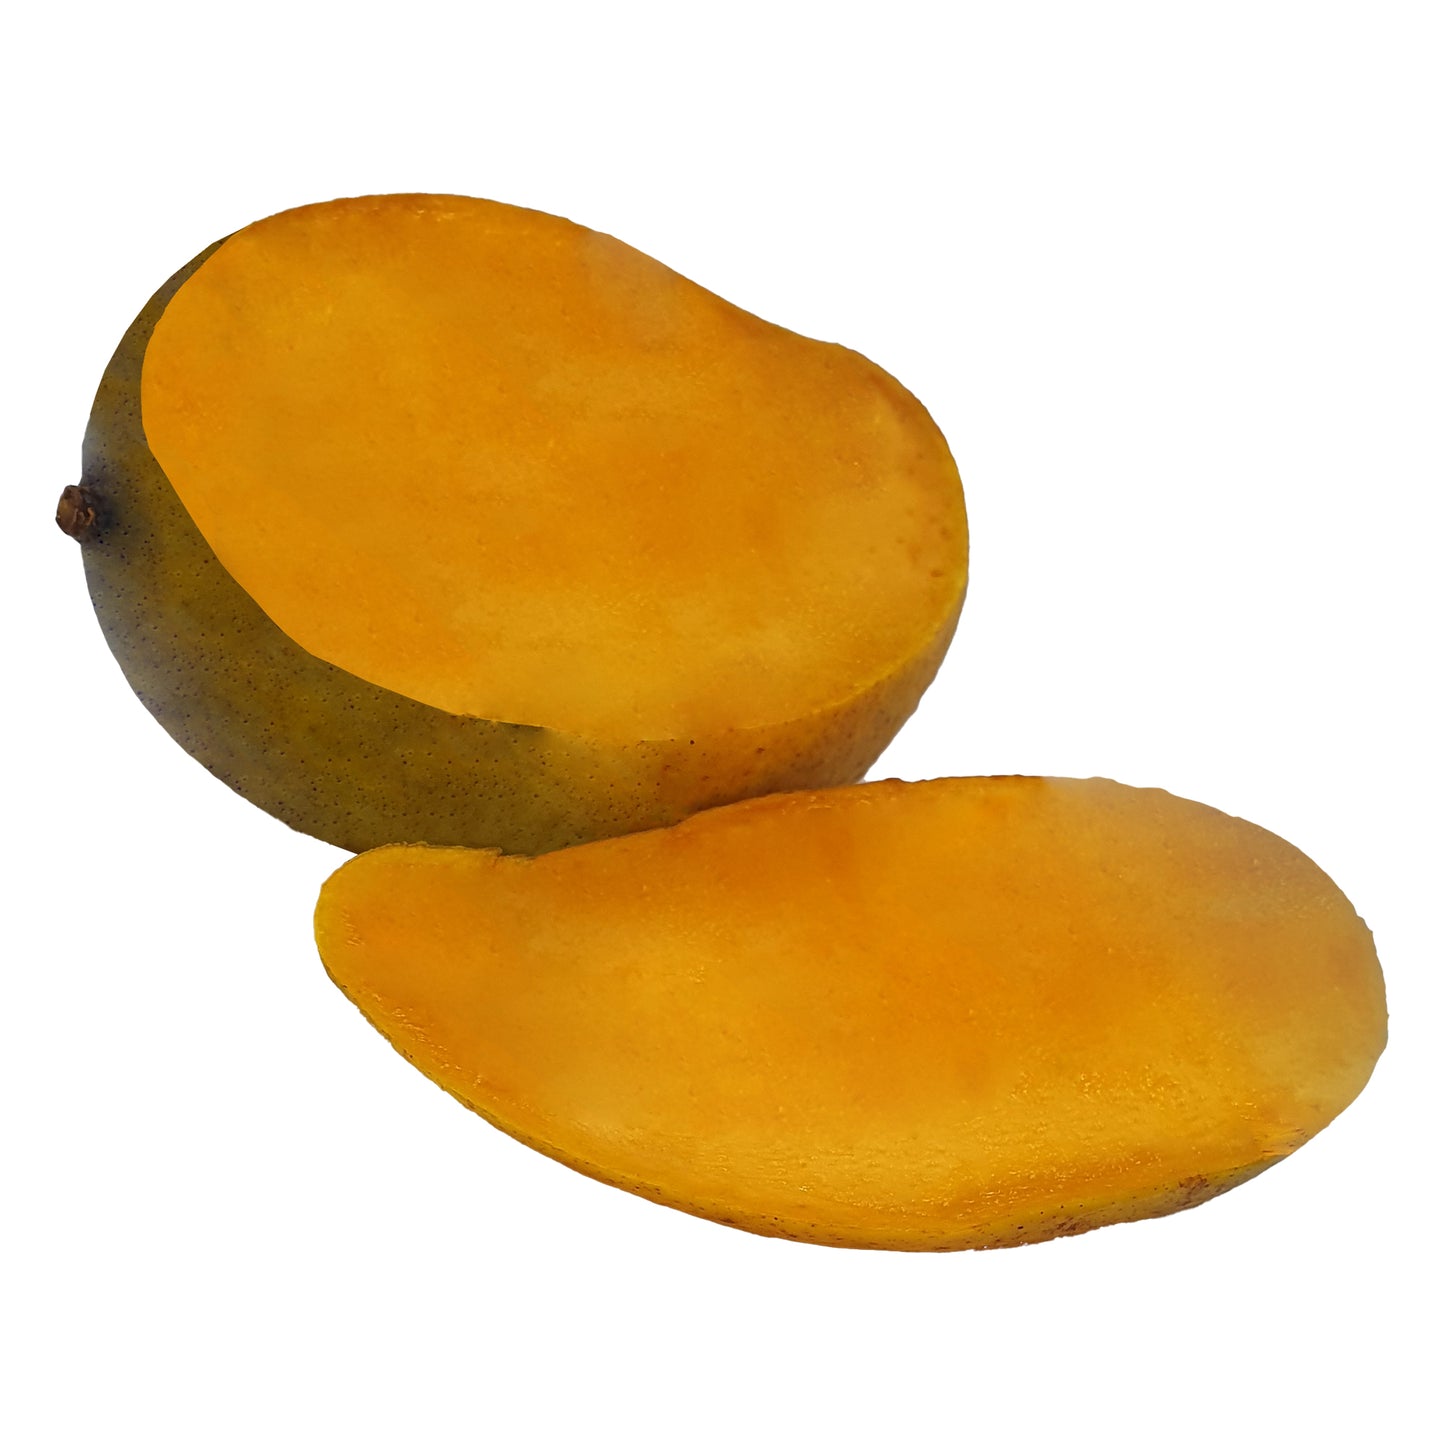 Mangue Alphonso (1 kg)